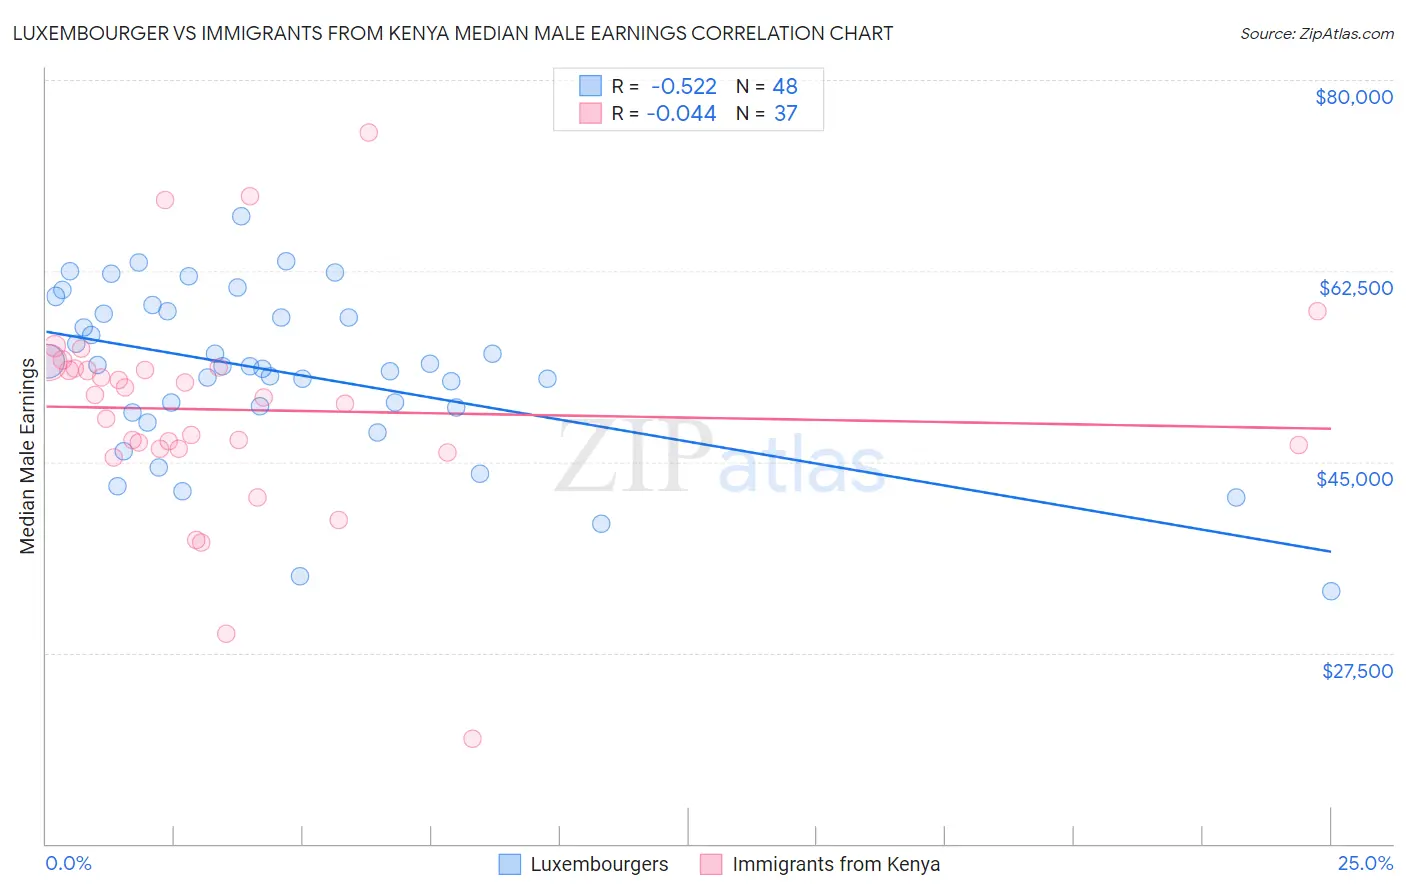 Luxembourger vs Immigrants from Kenya Median Male Earnings